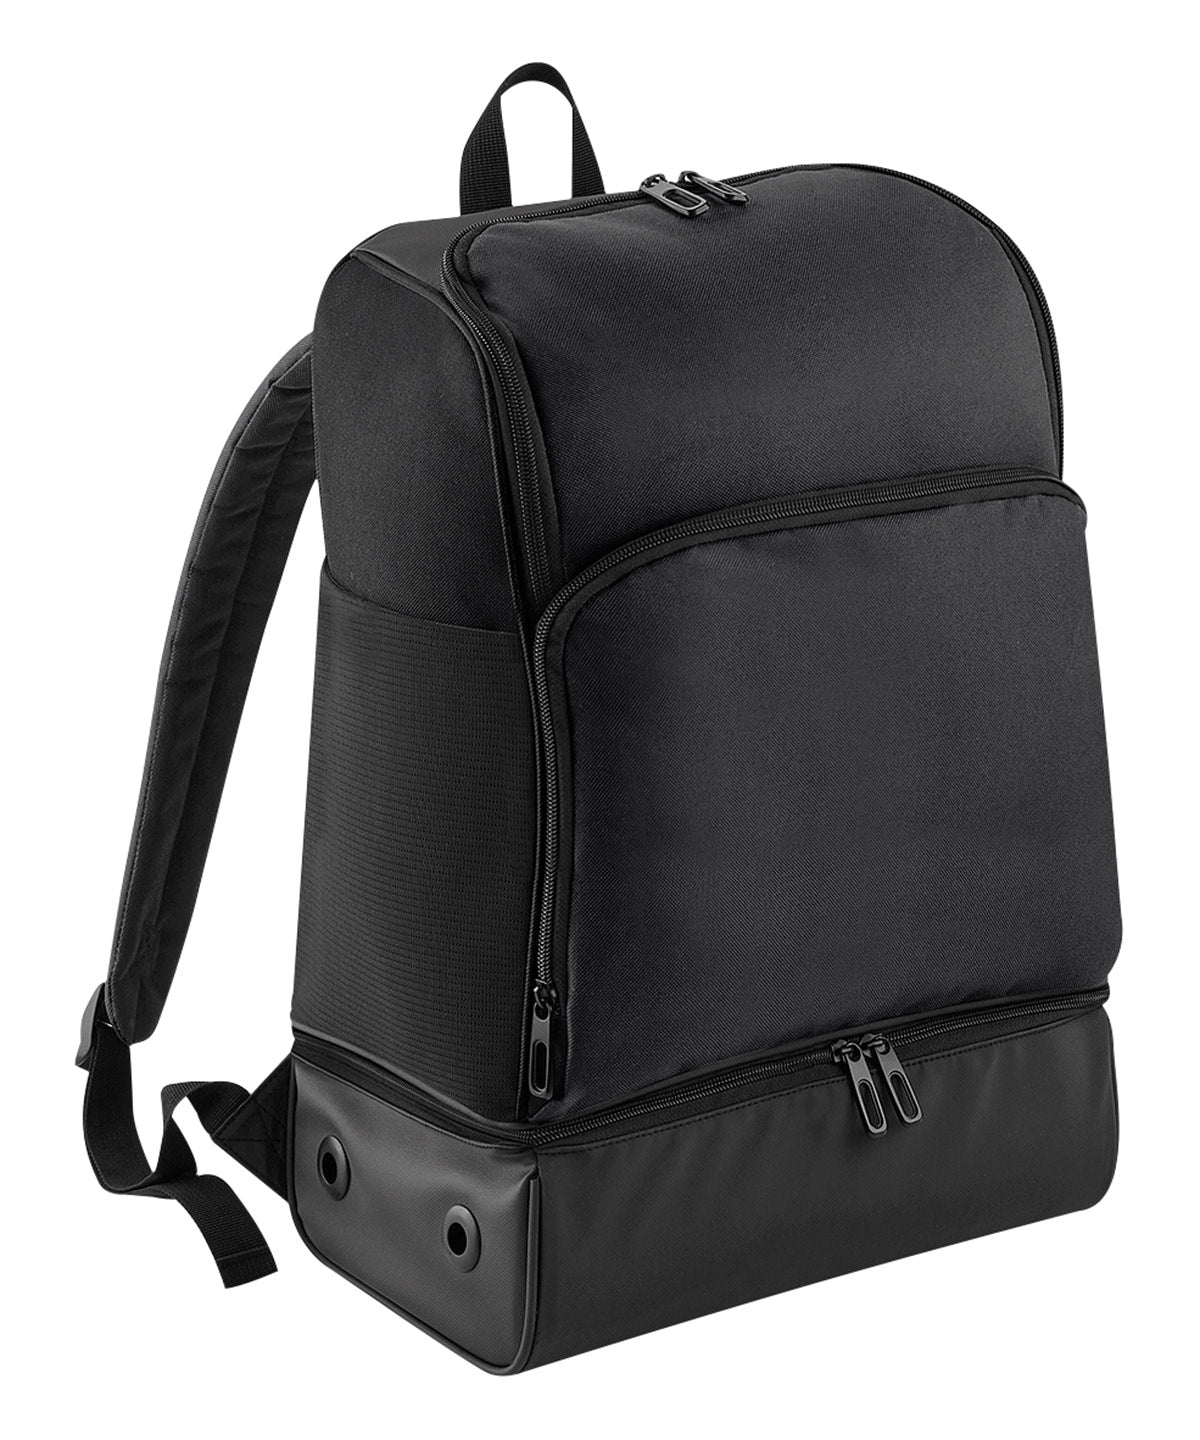 Töskur - Hardbase Sports Backpack